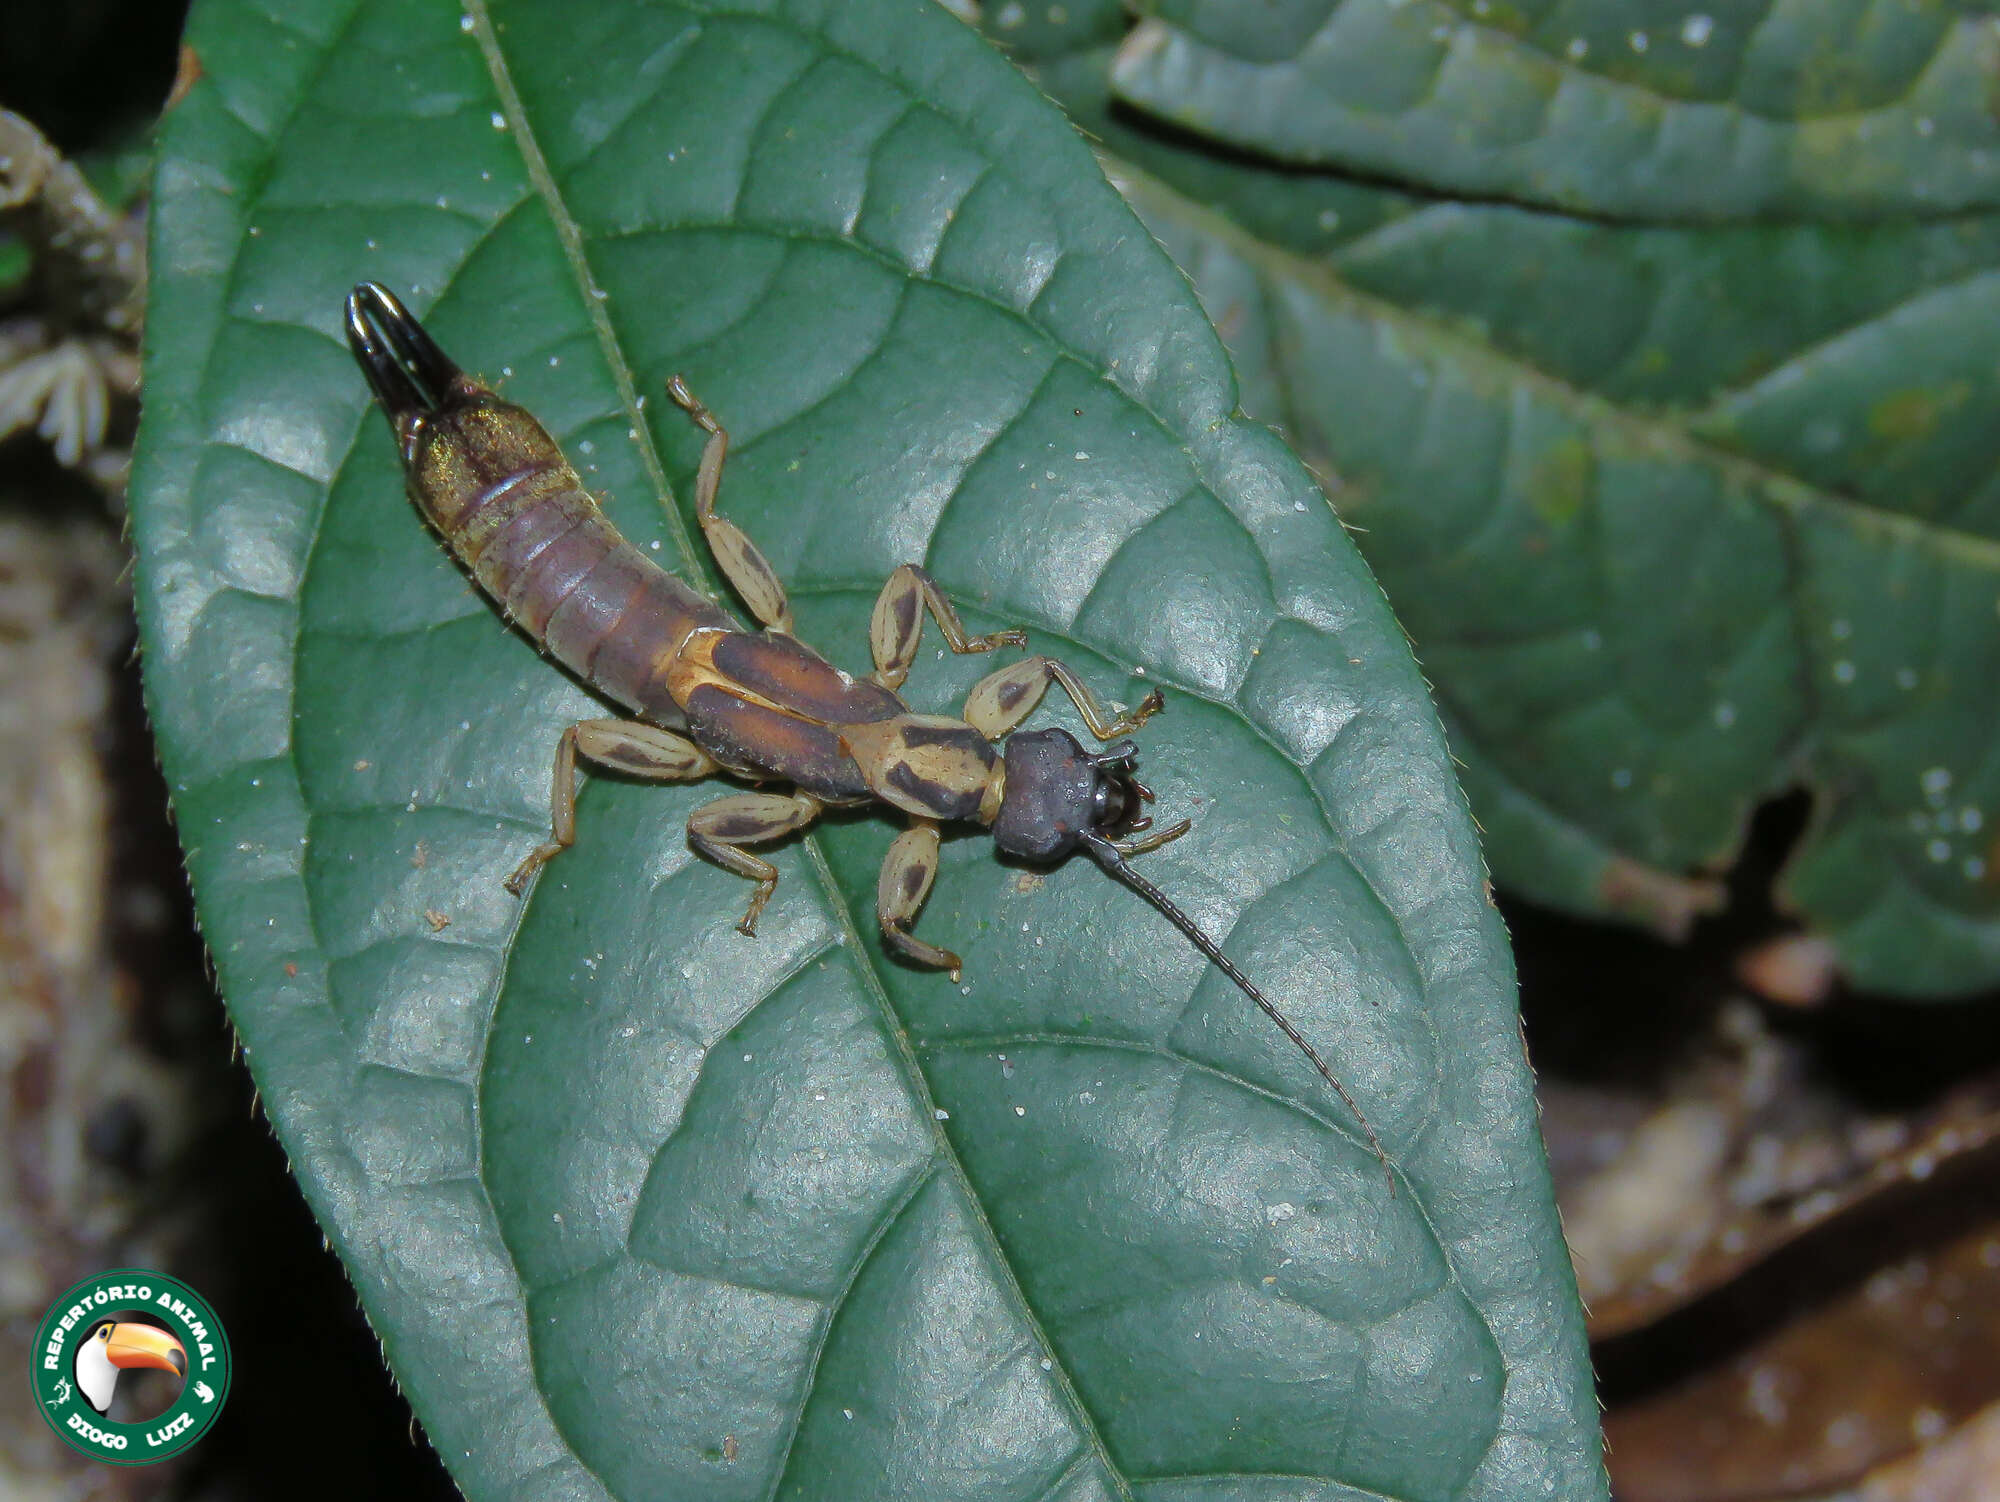 Image of Pygidicranoidea